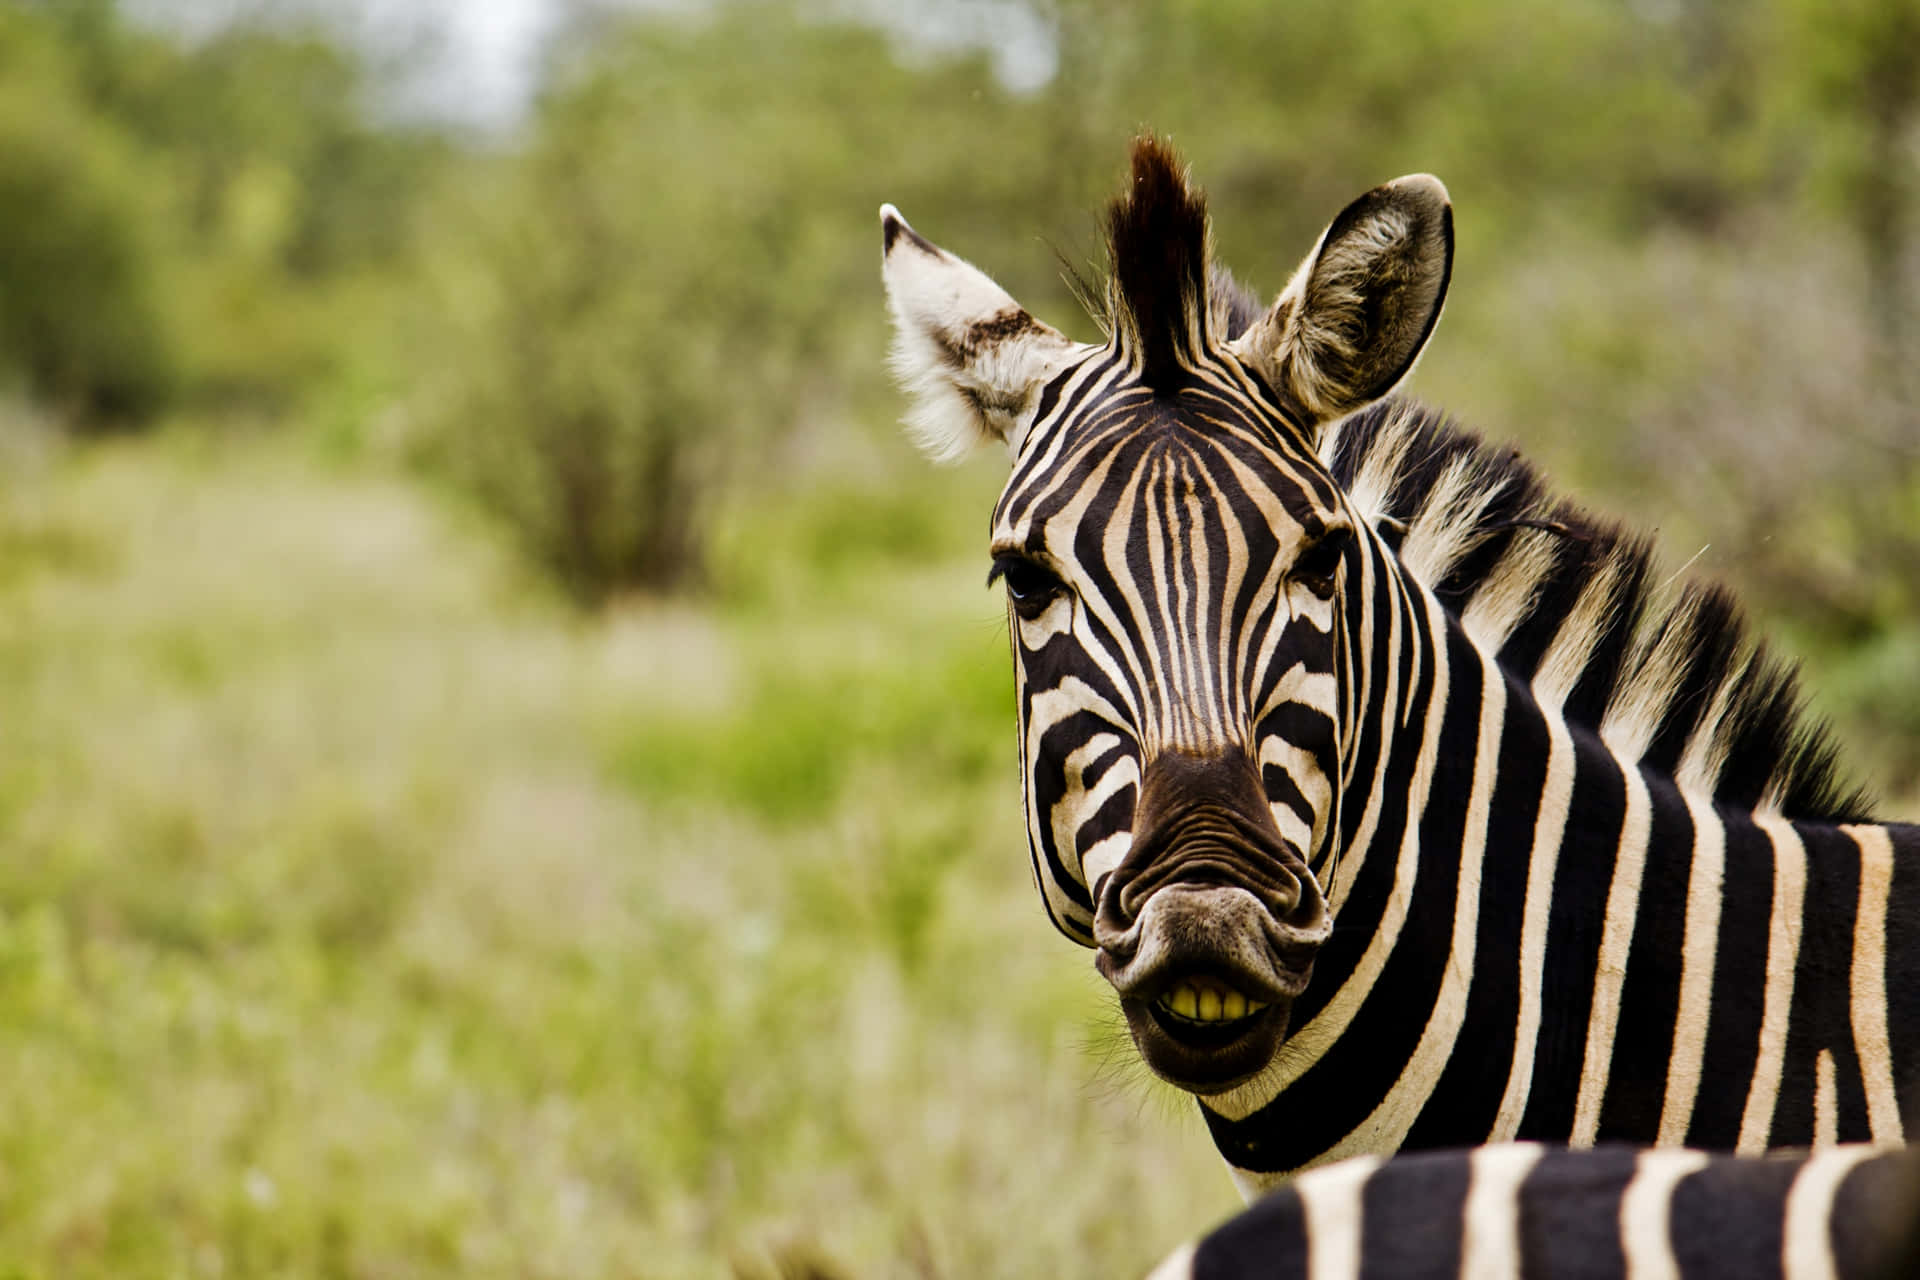 Strikingly Beautiful Zebra in Natural Habitat